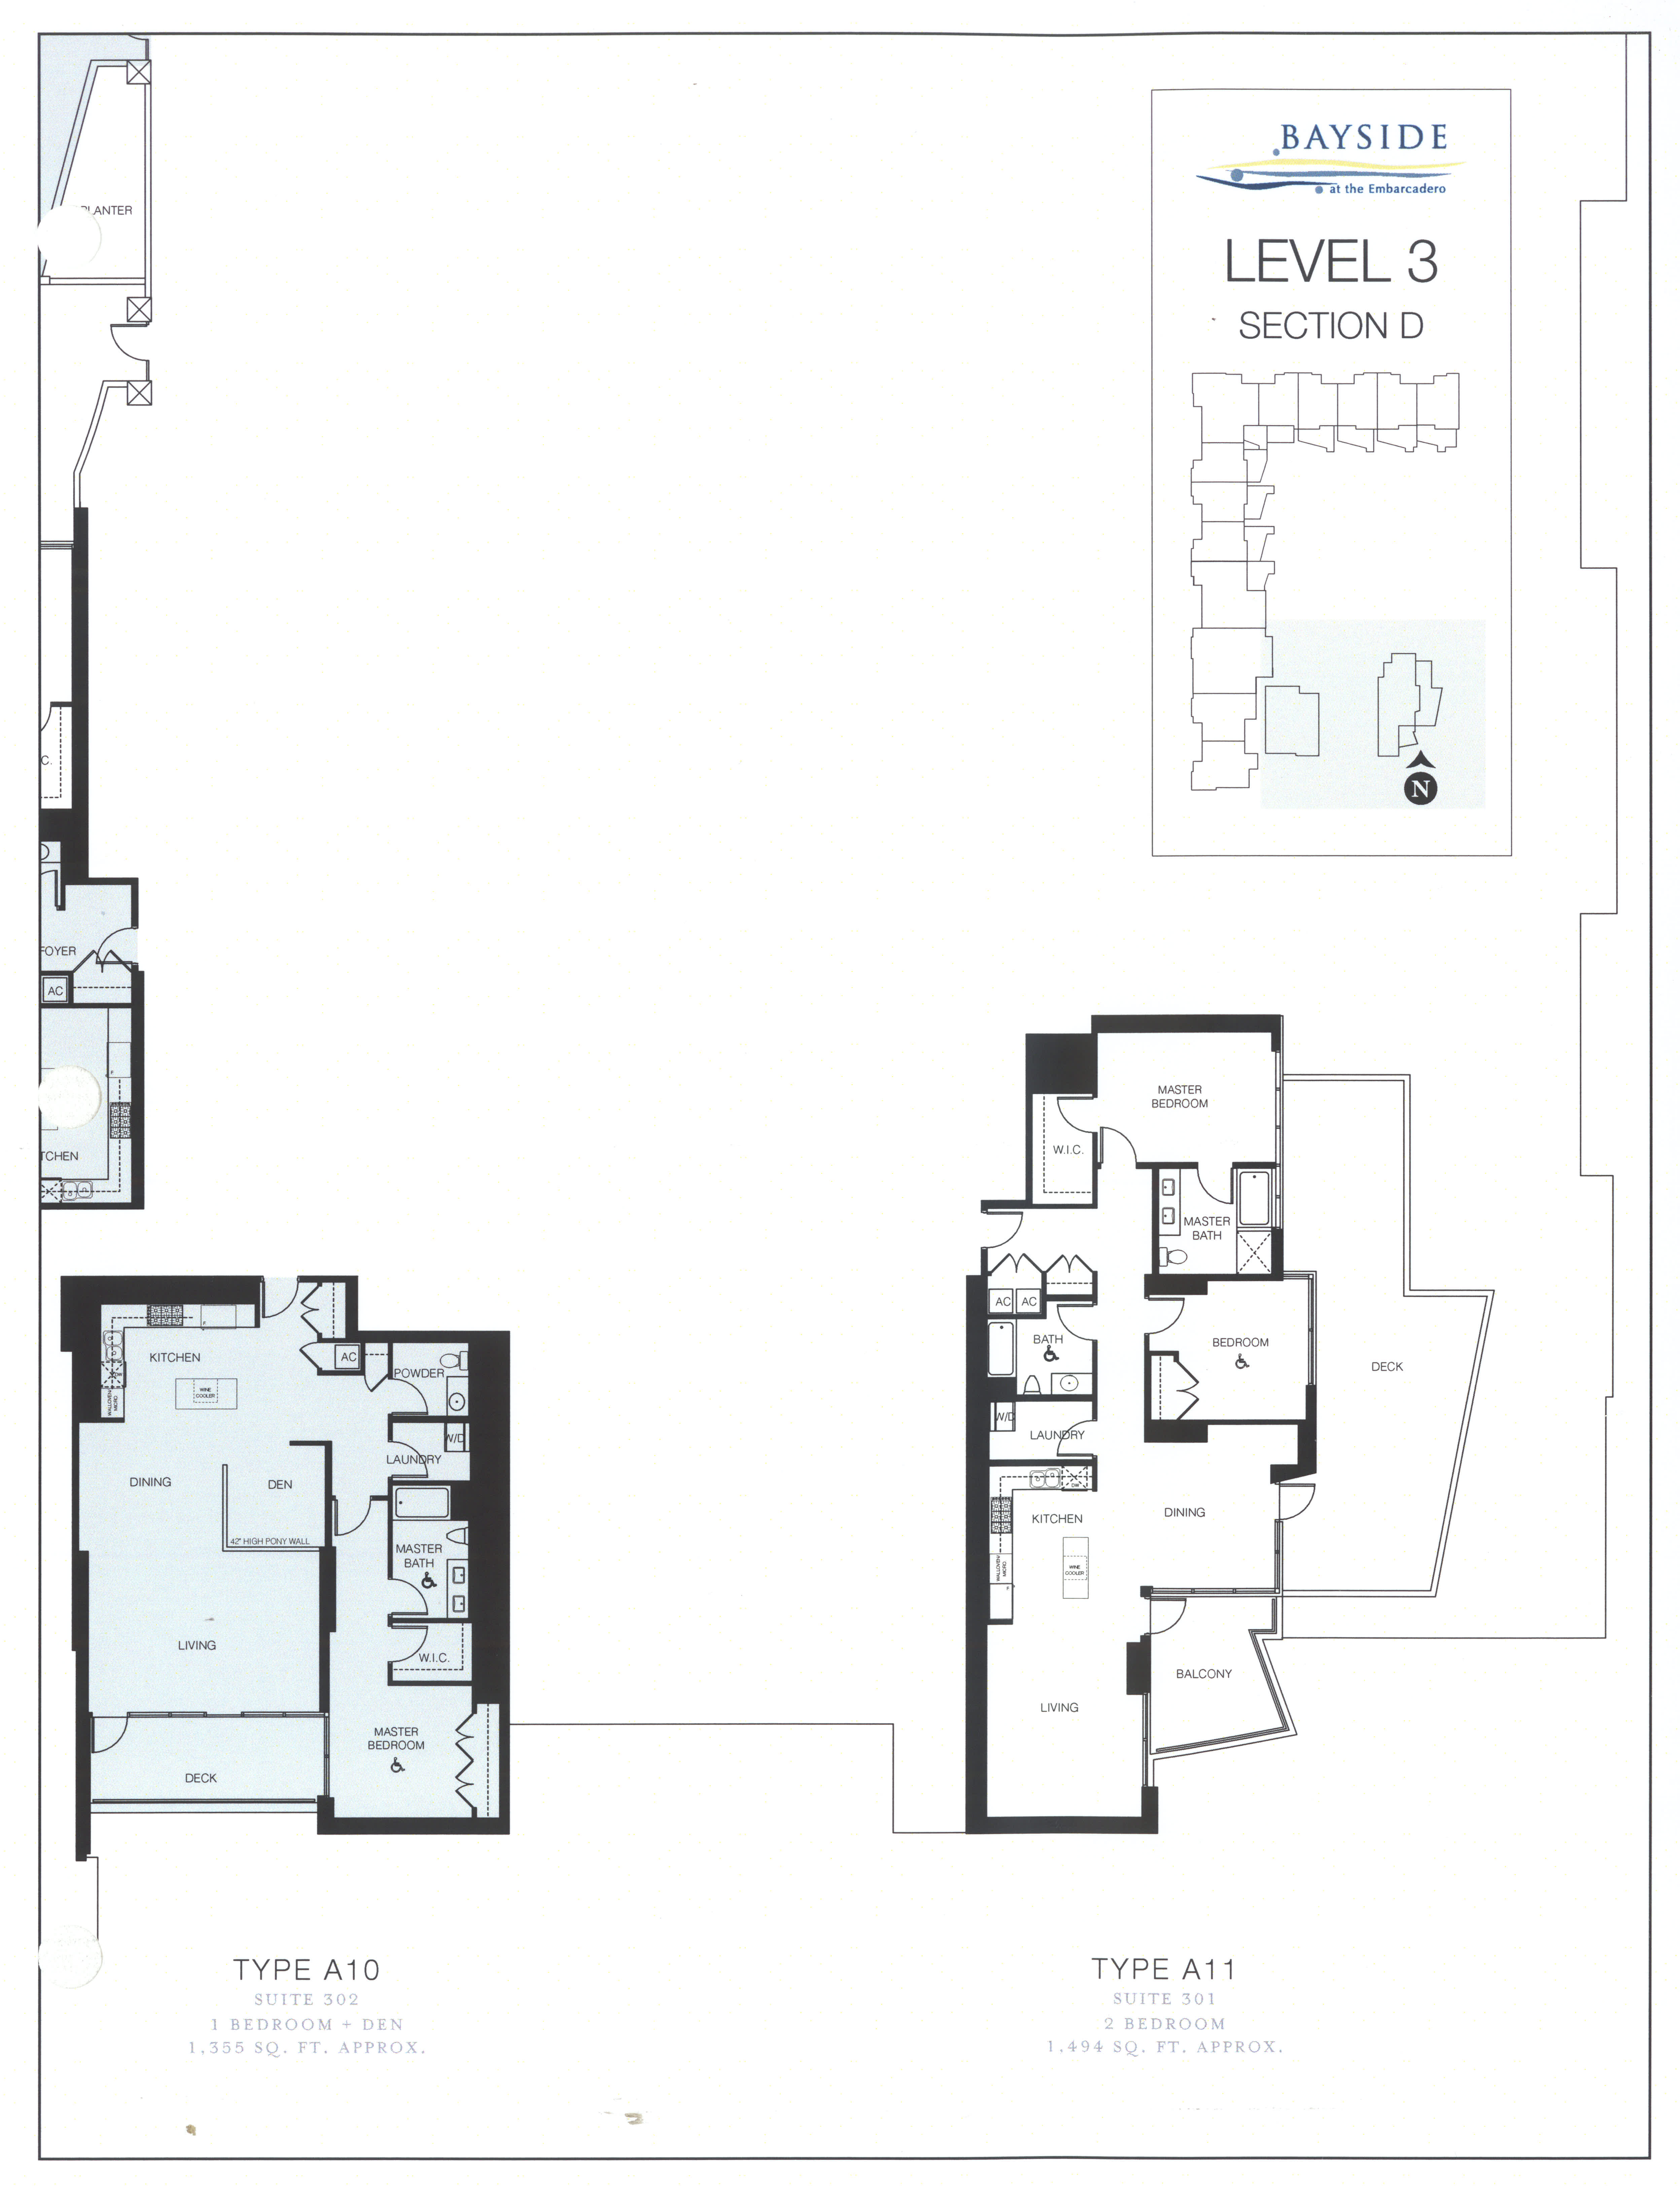 Bayside Floor Plan Level 3 Section D